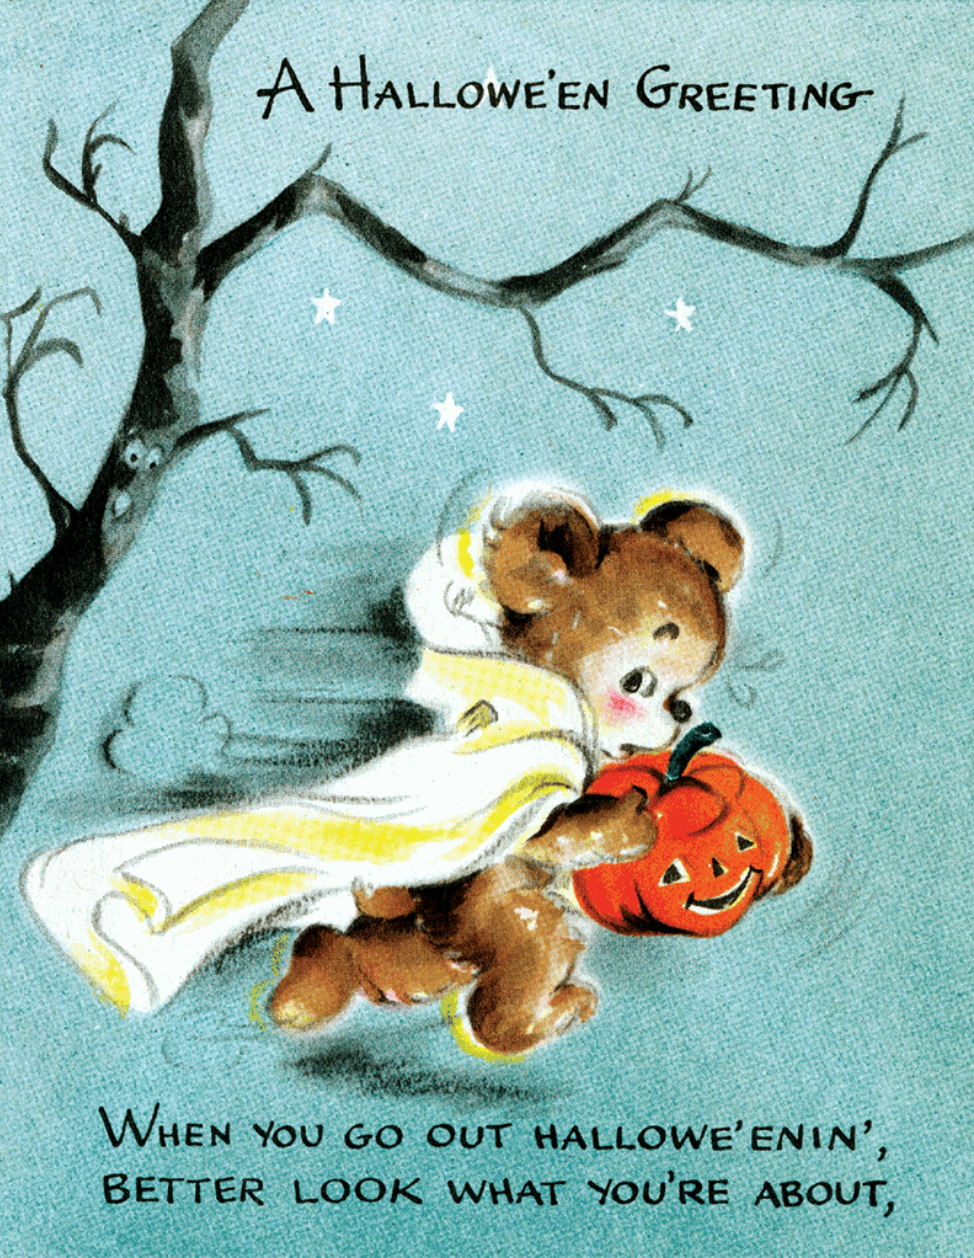 Bear & Pumpkin - Halloween Greeting Card